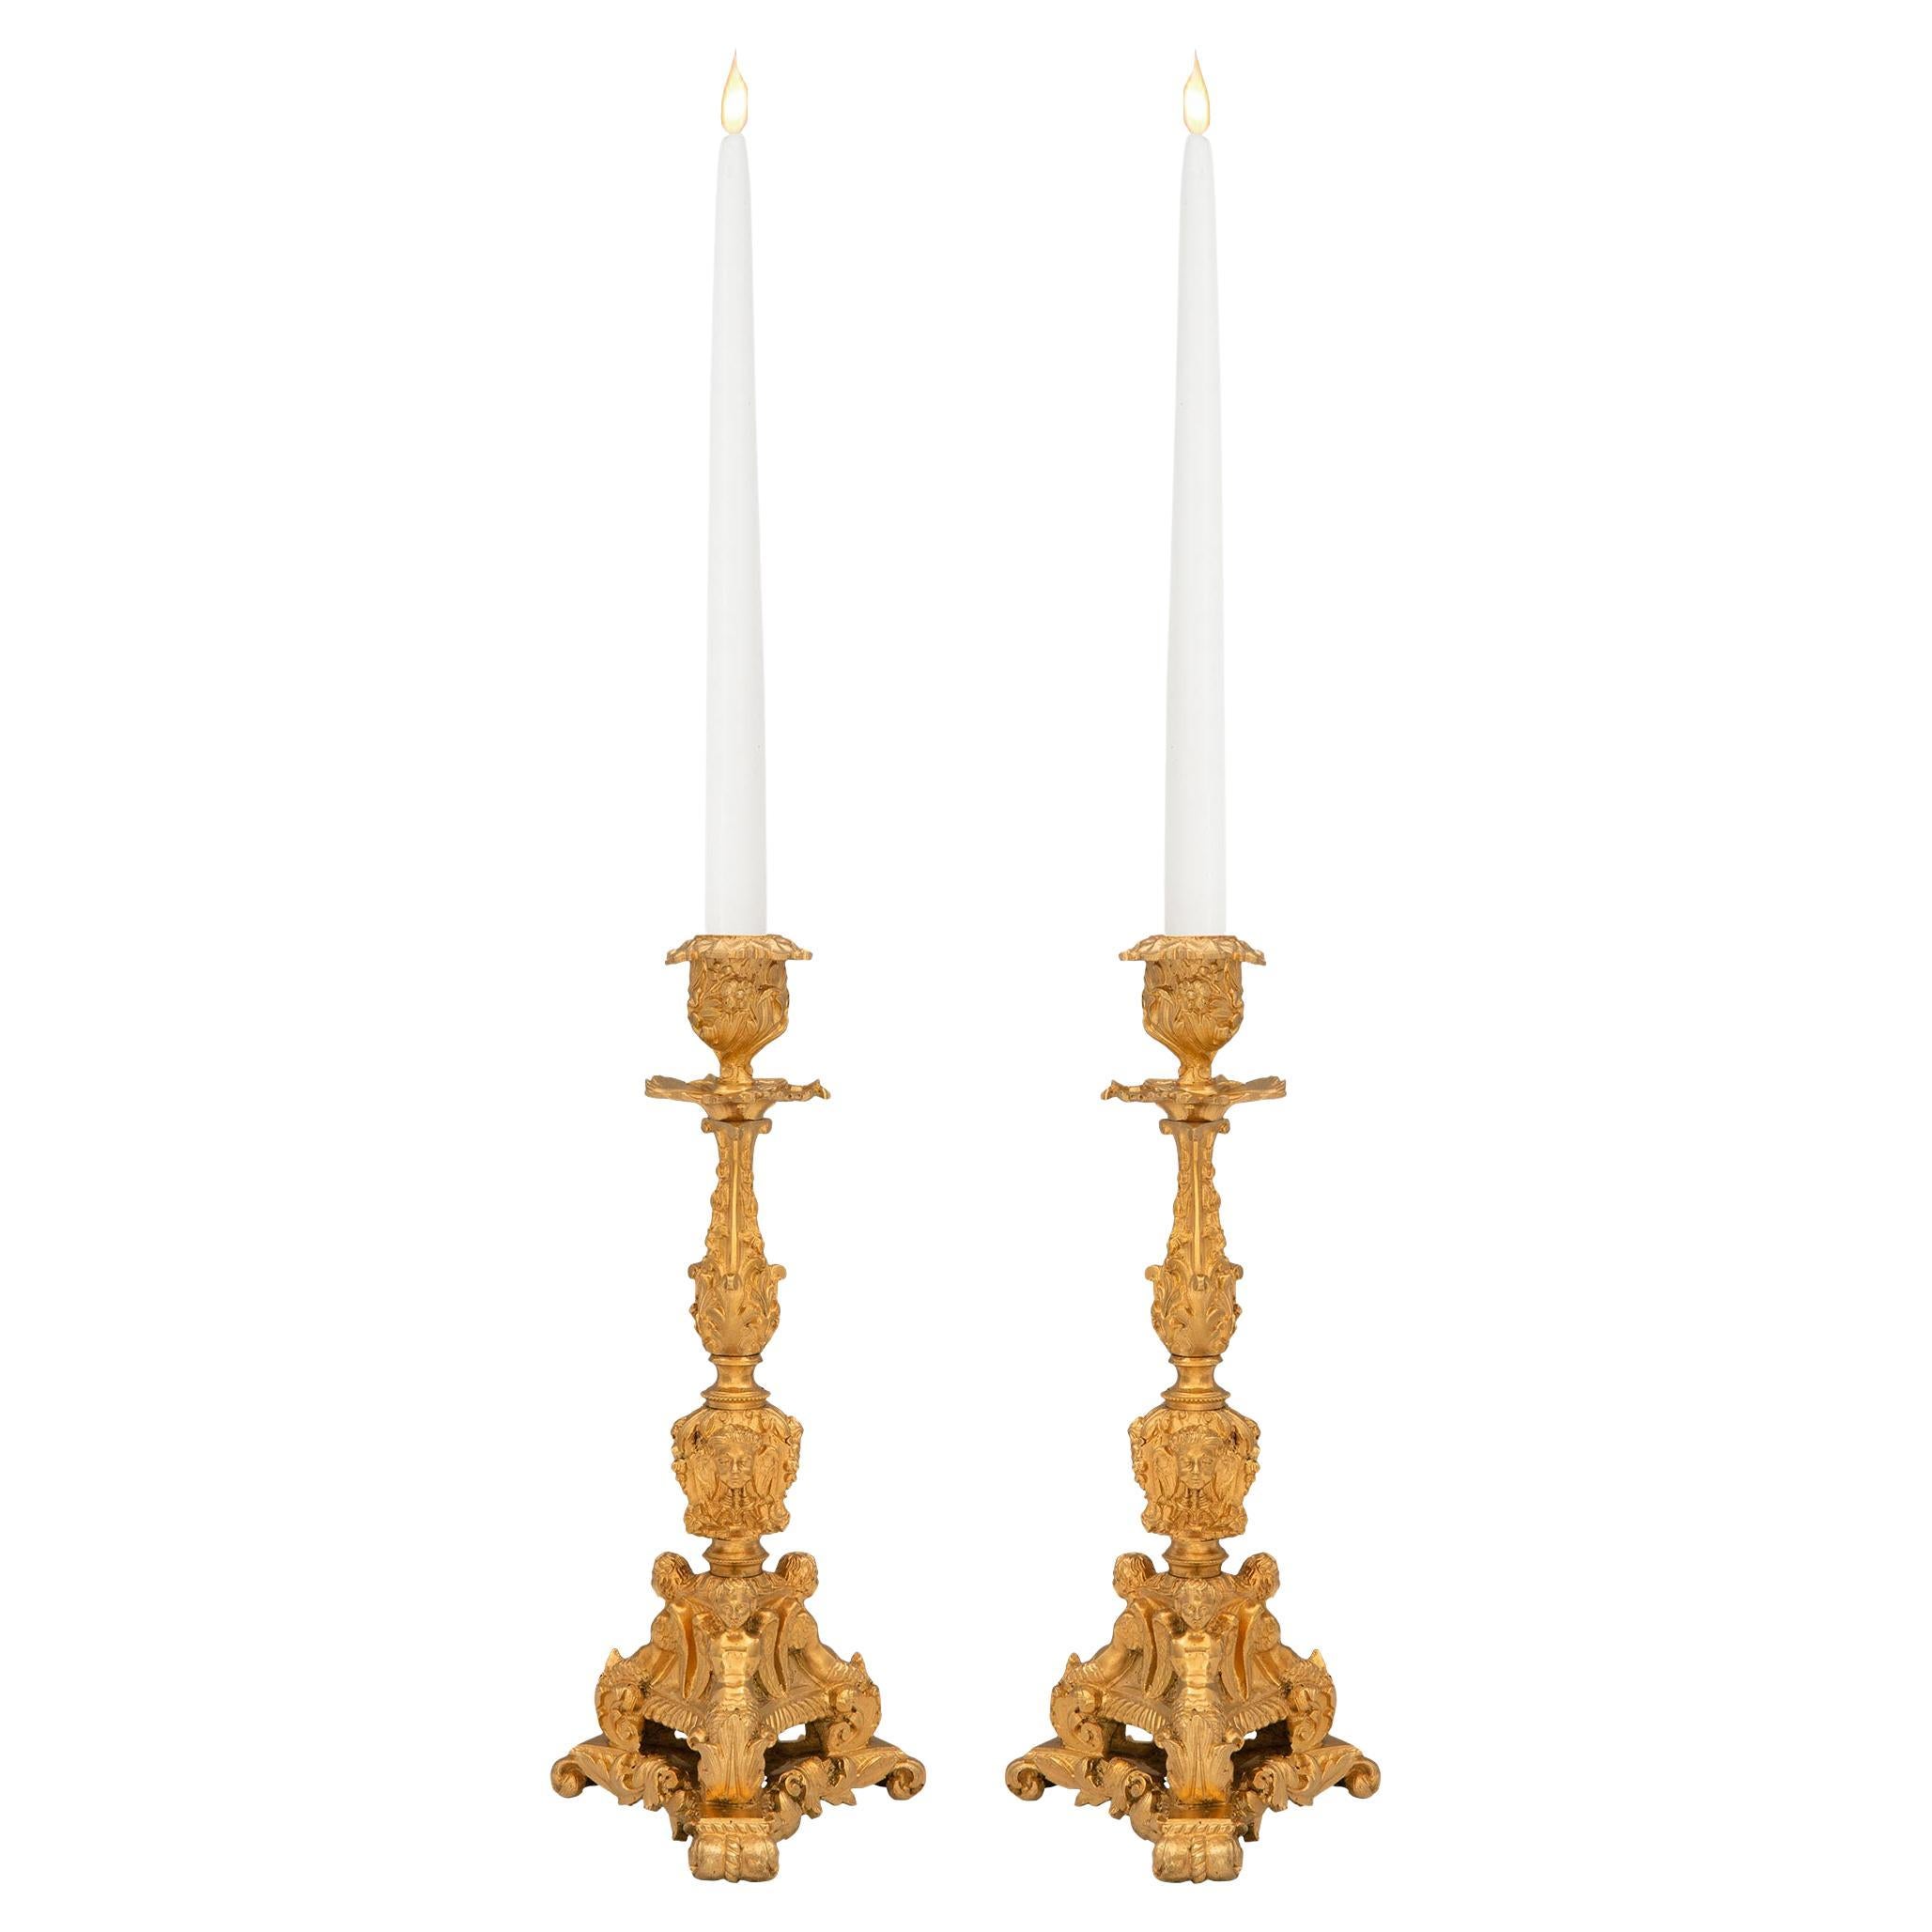 Pair of French 19th Century Regence Style Ormolu Candlesticks